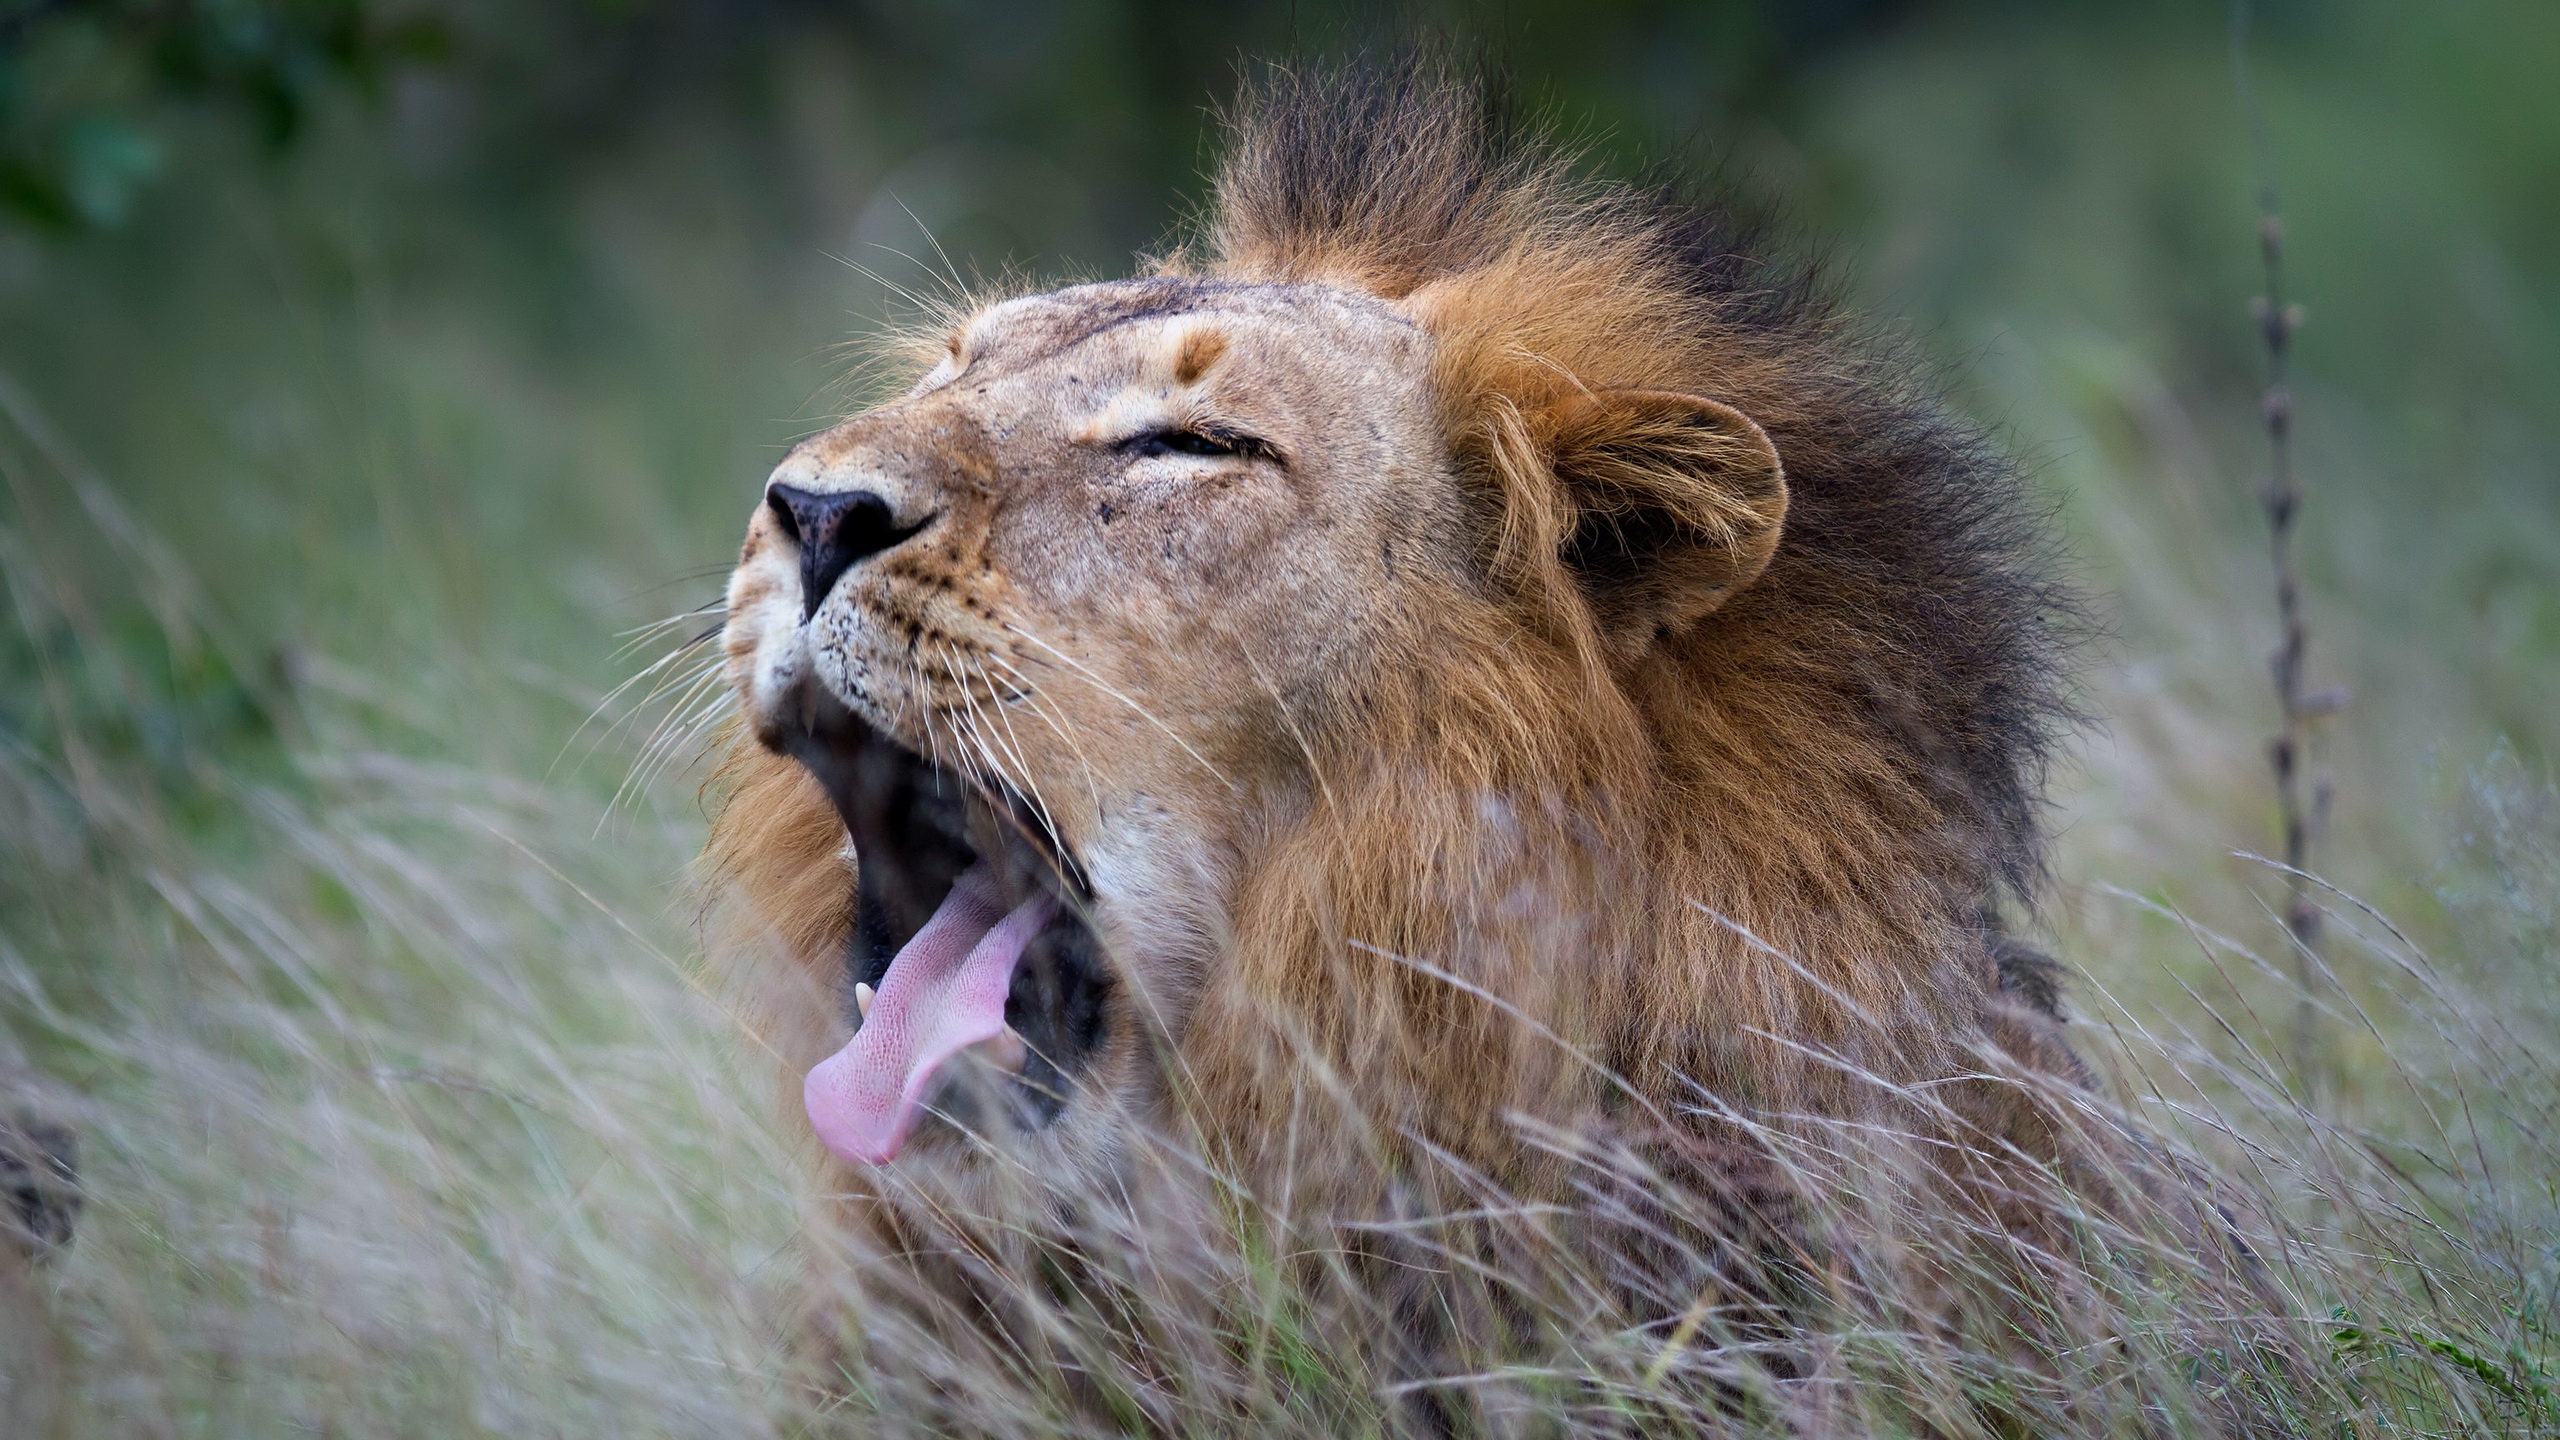 General 2560x1440 animals lion mammals big cats nature yawning feline tongue out closeup